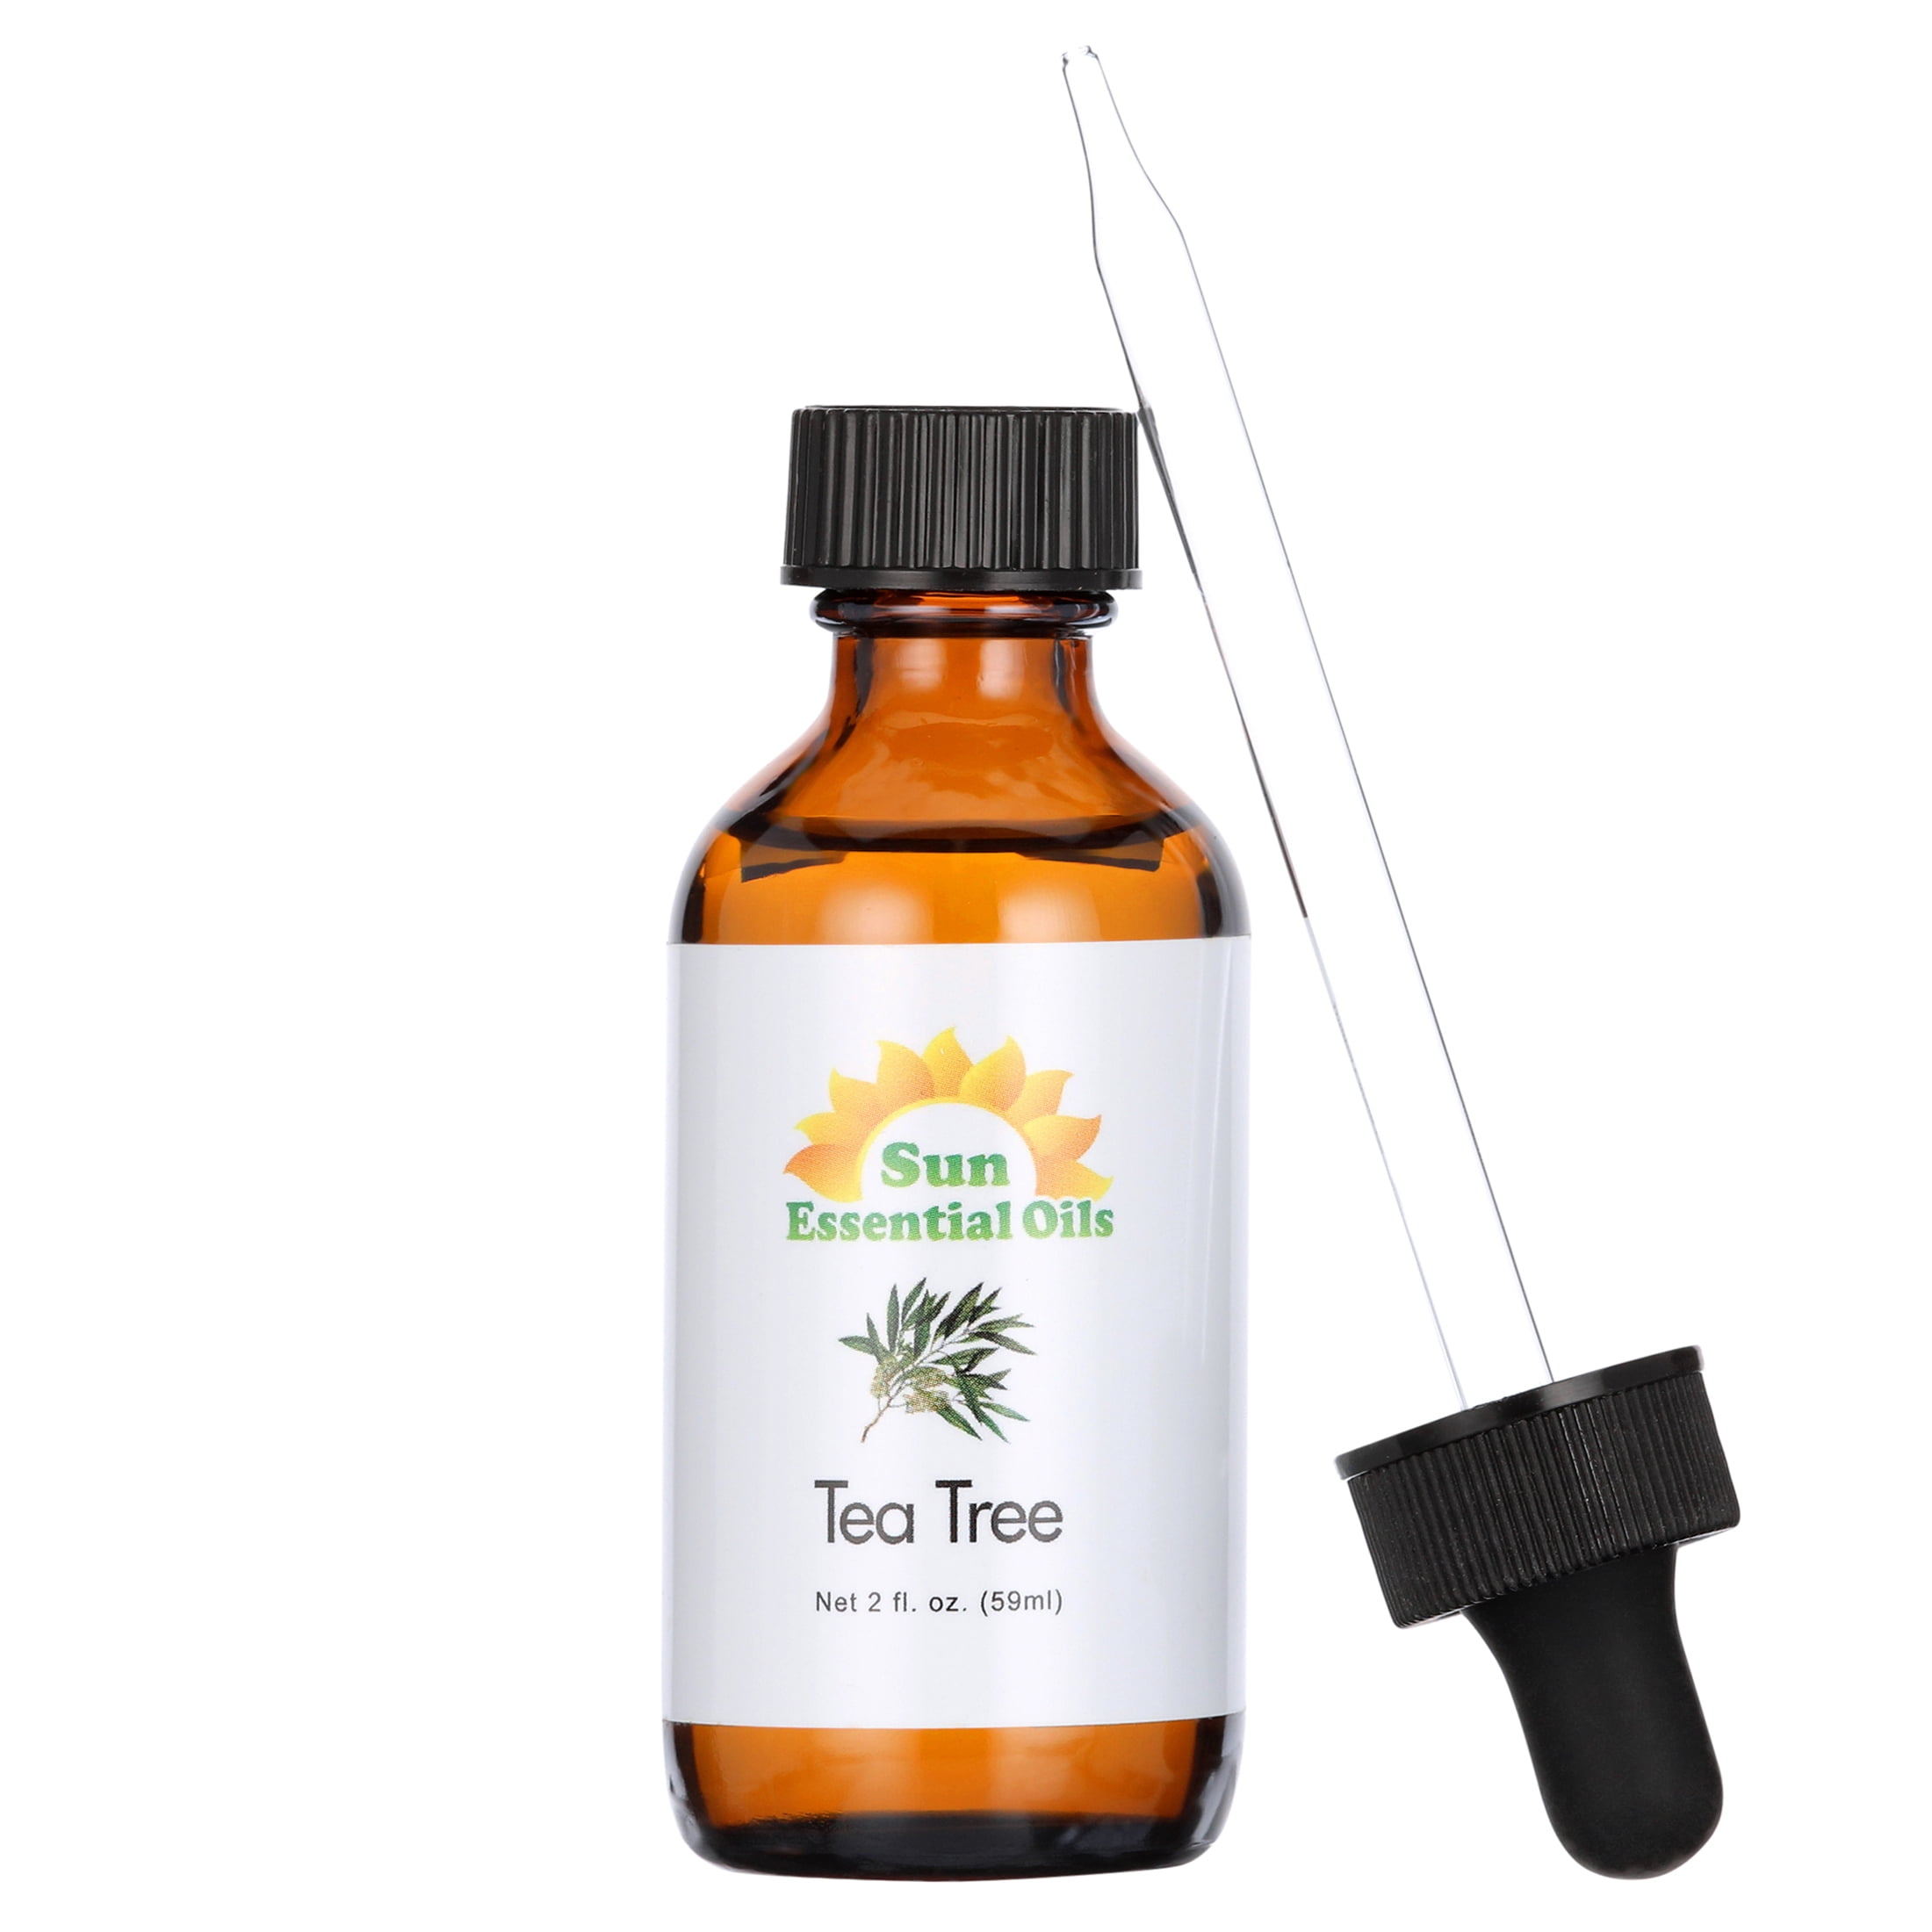 Tea Tree (2 fl oz) Best Essential Oil - 2 Ounces (59ml)